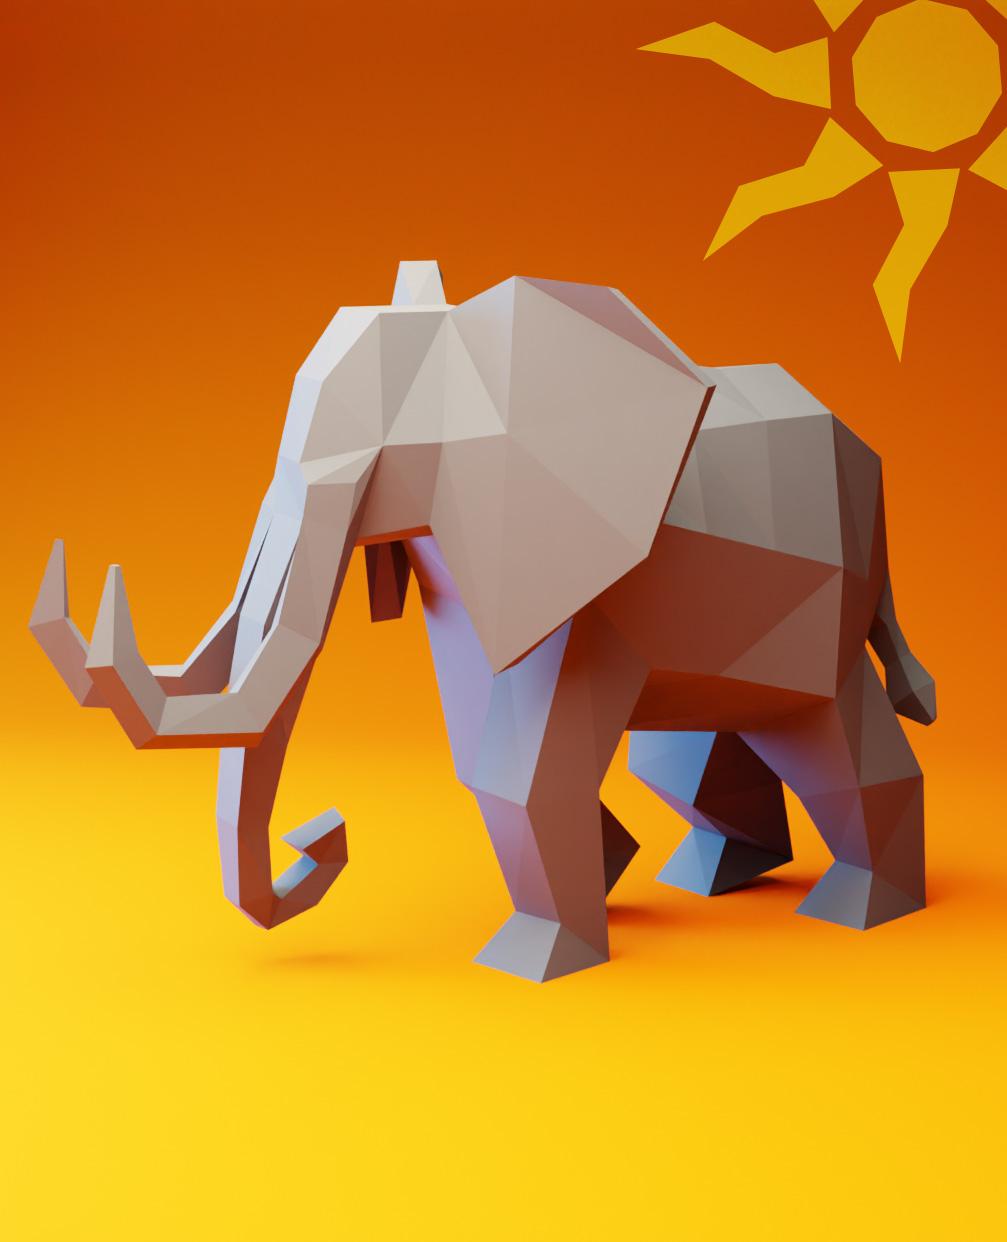 Low Poly Elephant 3d model